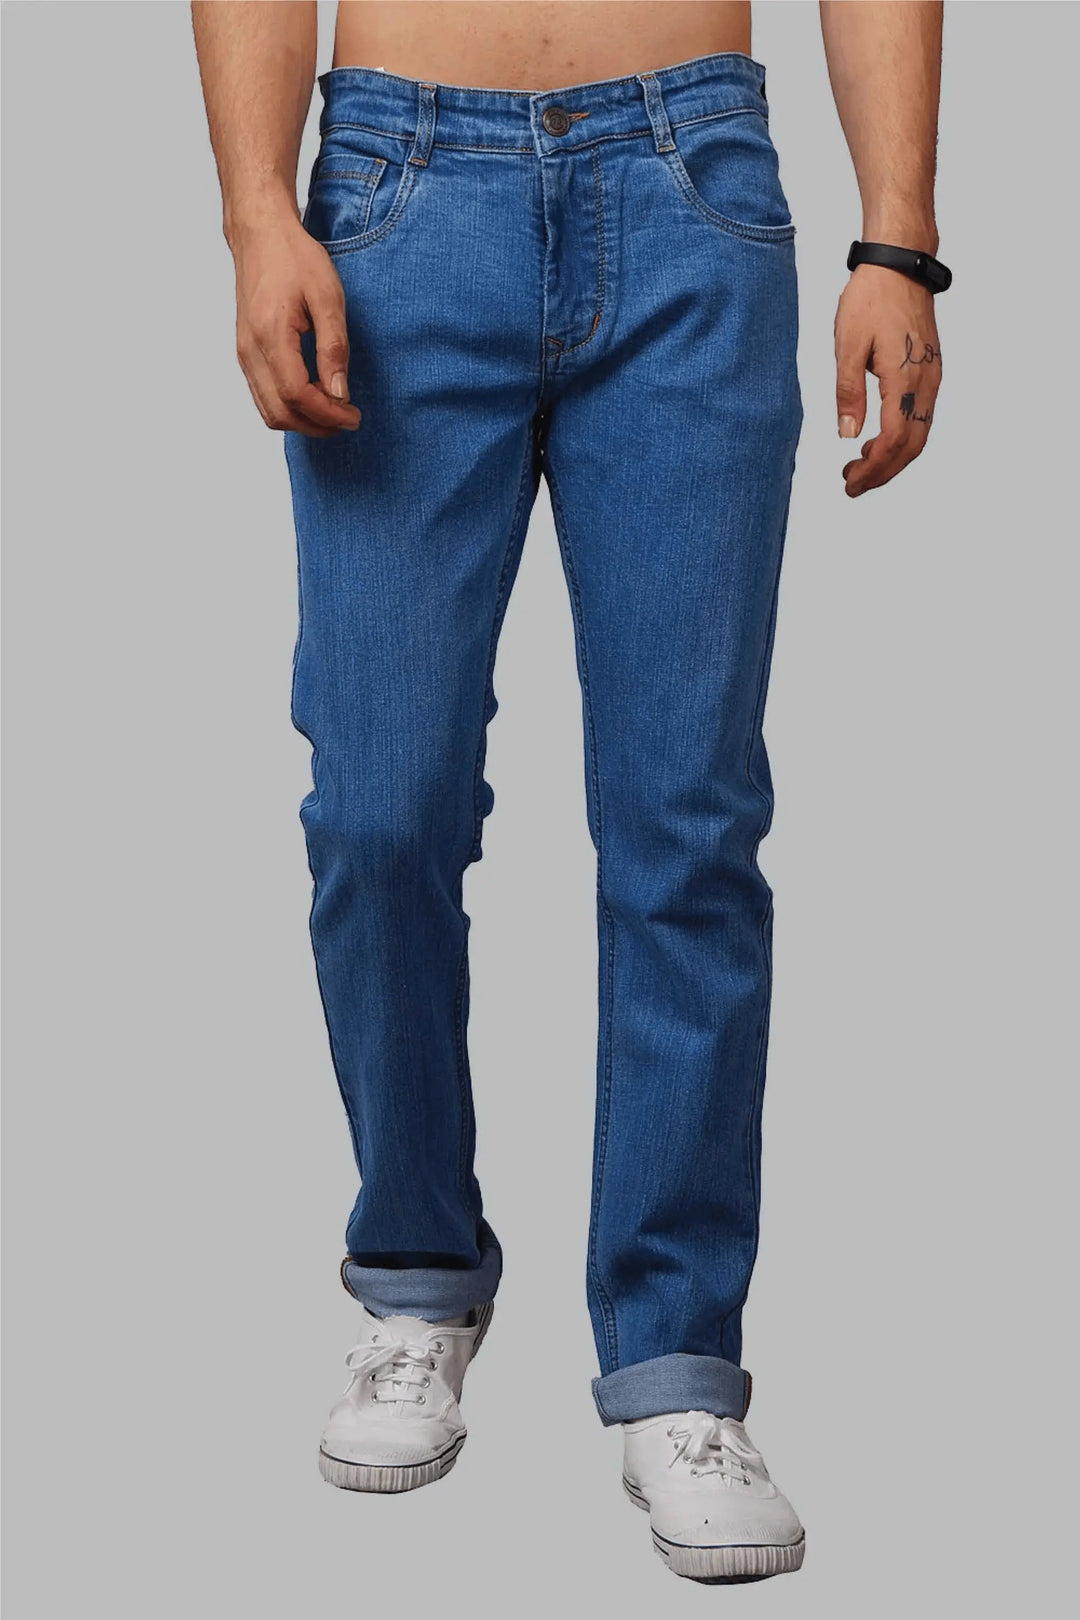 Slim Fit Blue Stretchable Denim Jeans For Men - Peplos Jeans 